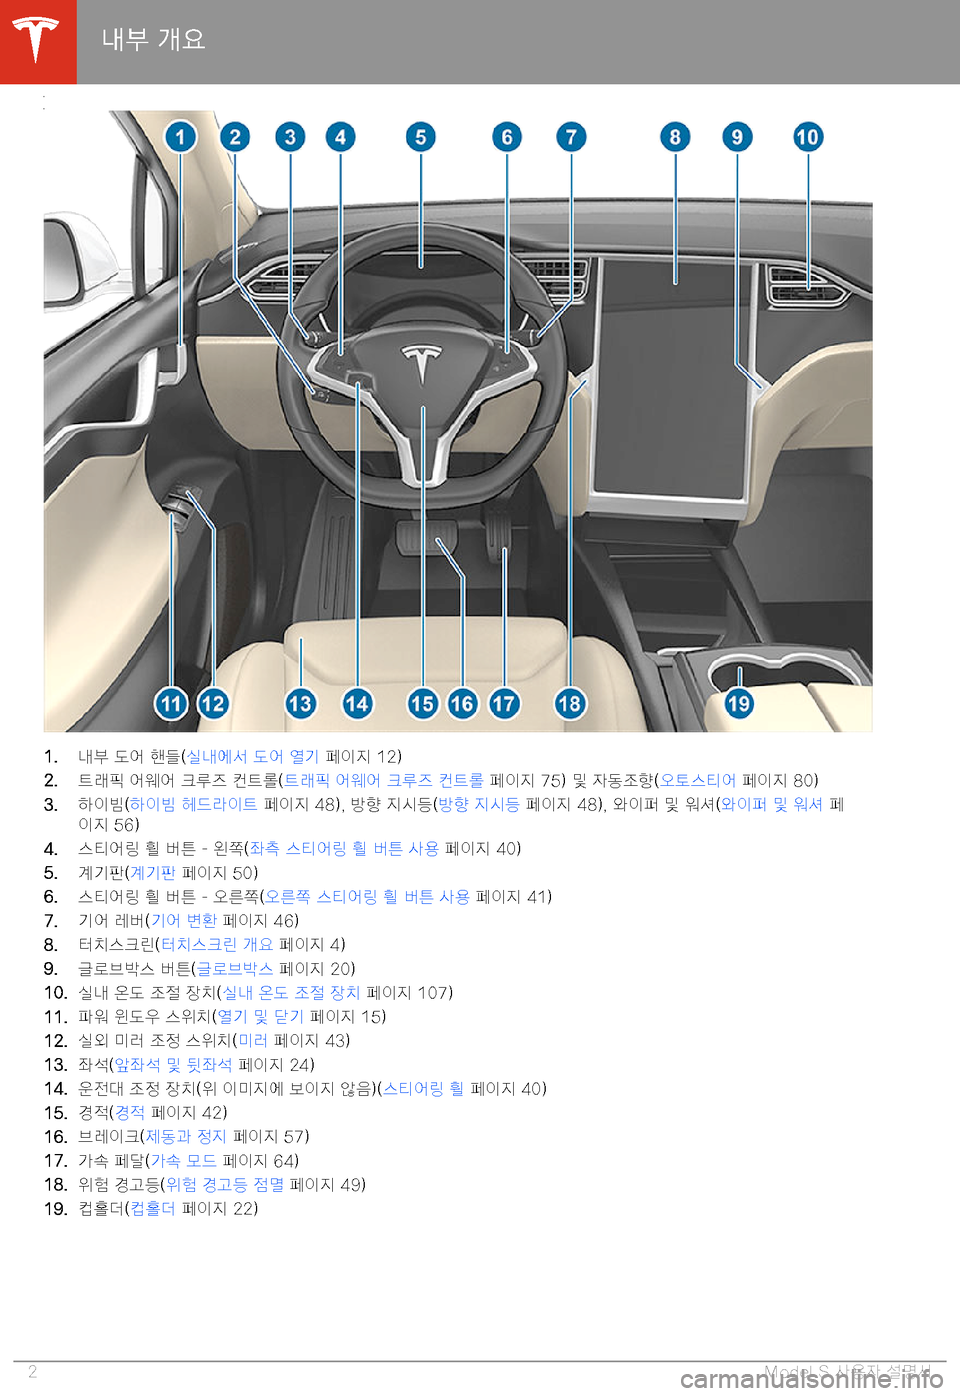 TESLA MODEL S 2020  사용자 가이드 (in Korean) "9